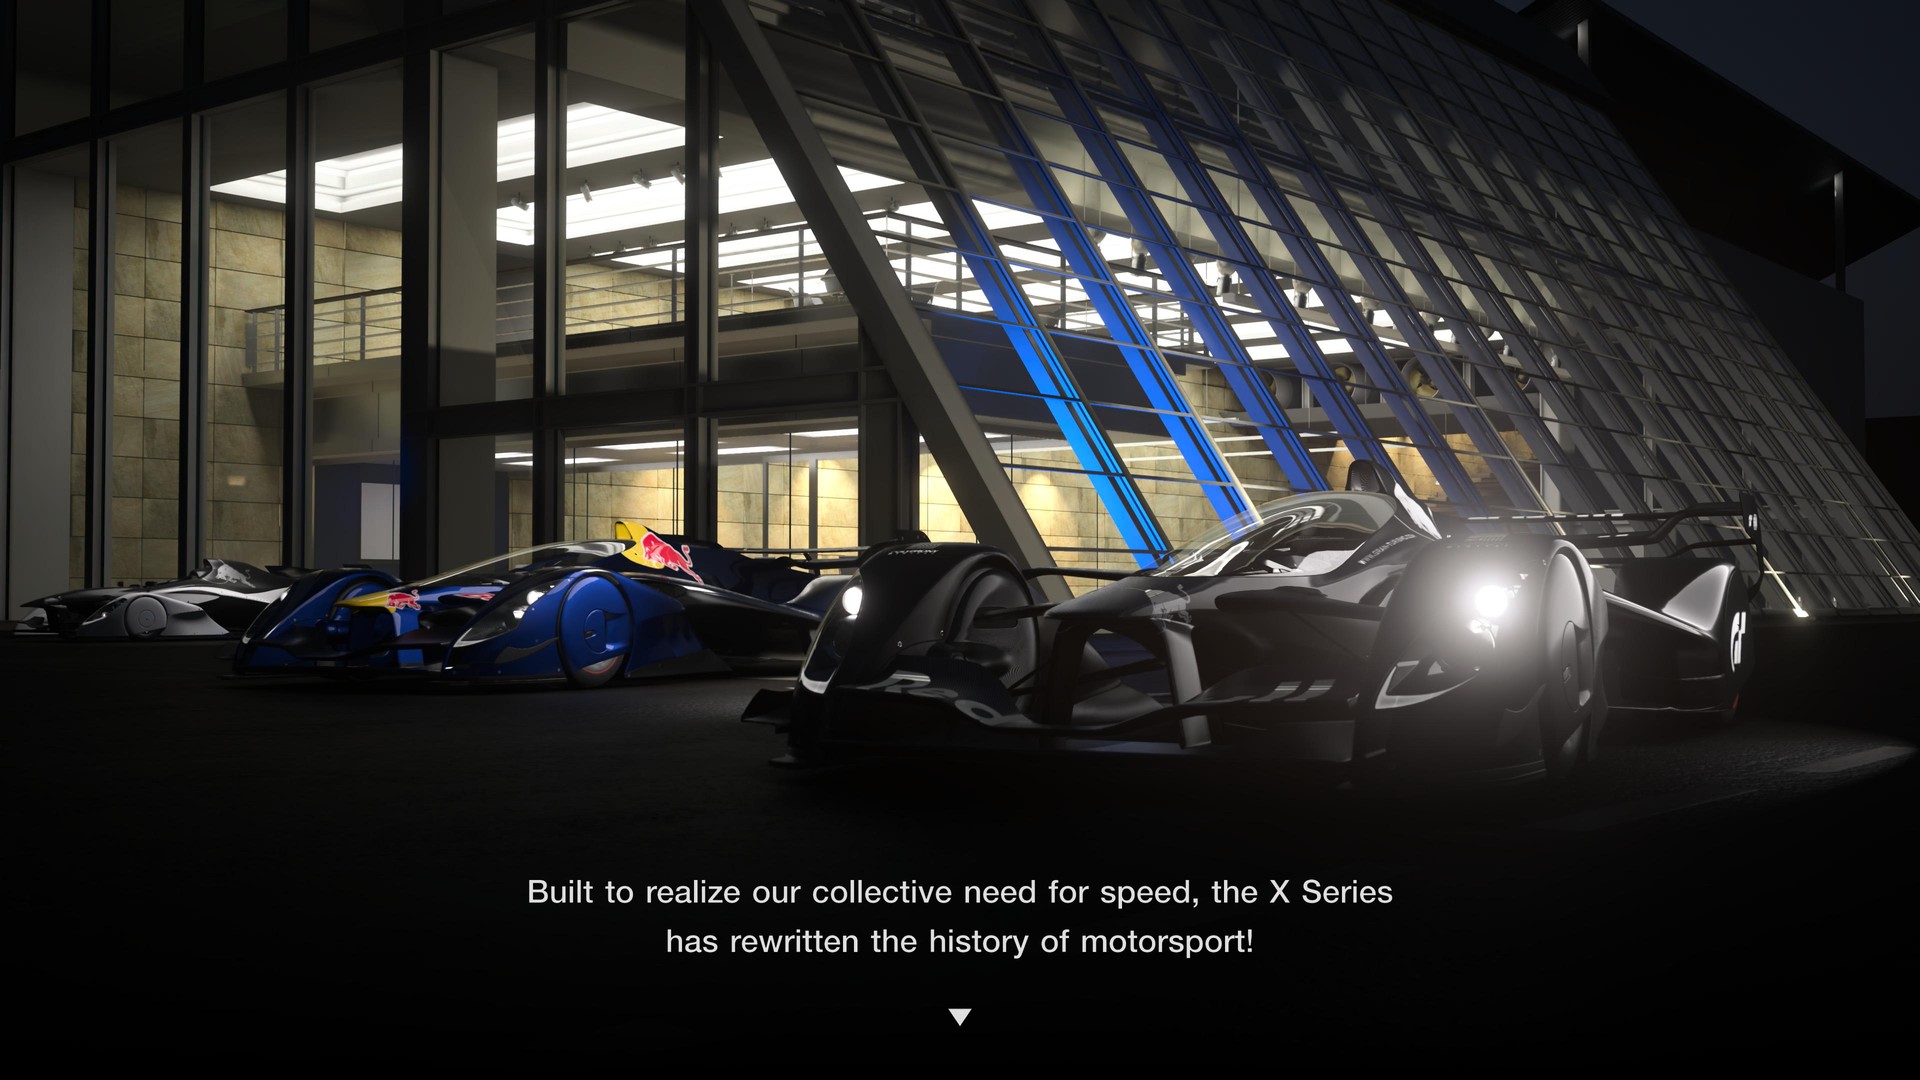 Gran Turismo 7 - GT Cafe - Menu 30 - Upgrade Your Porsche - PS5